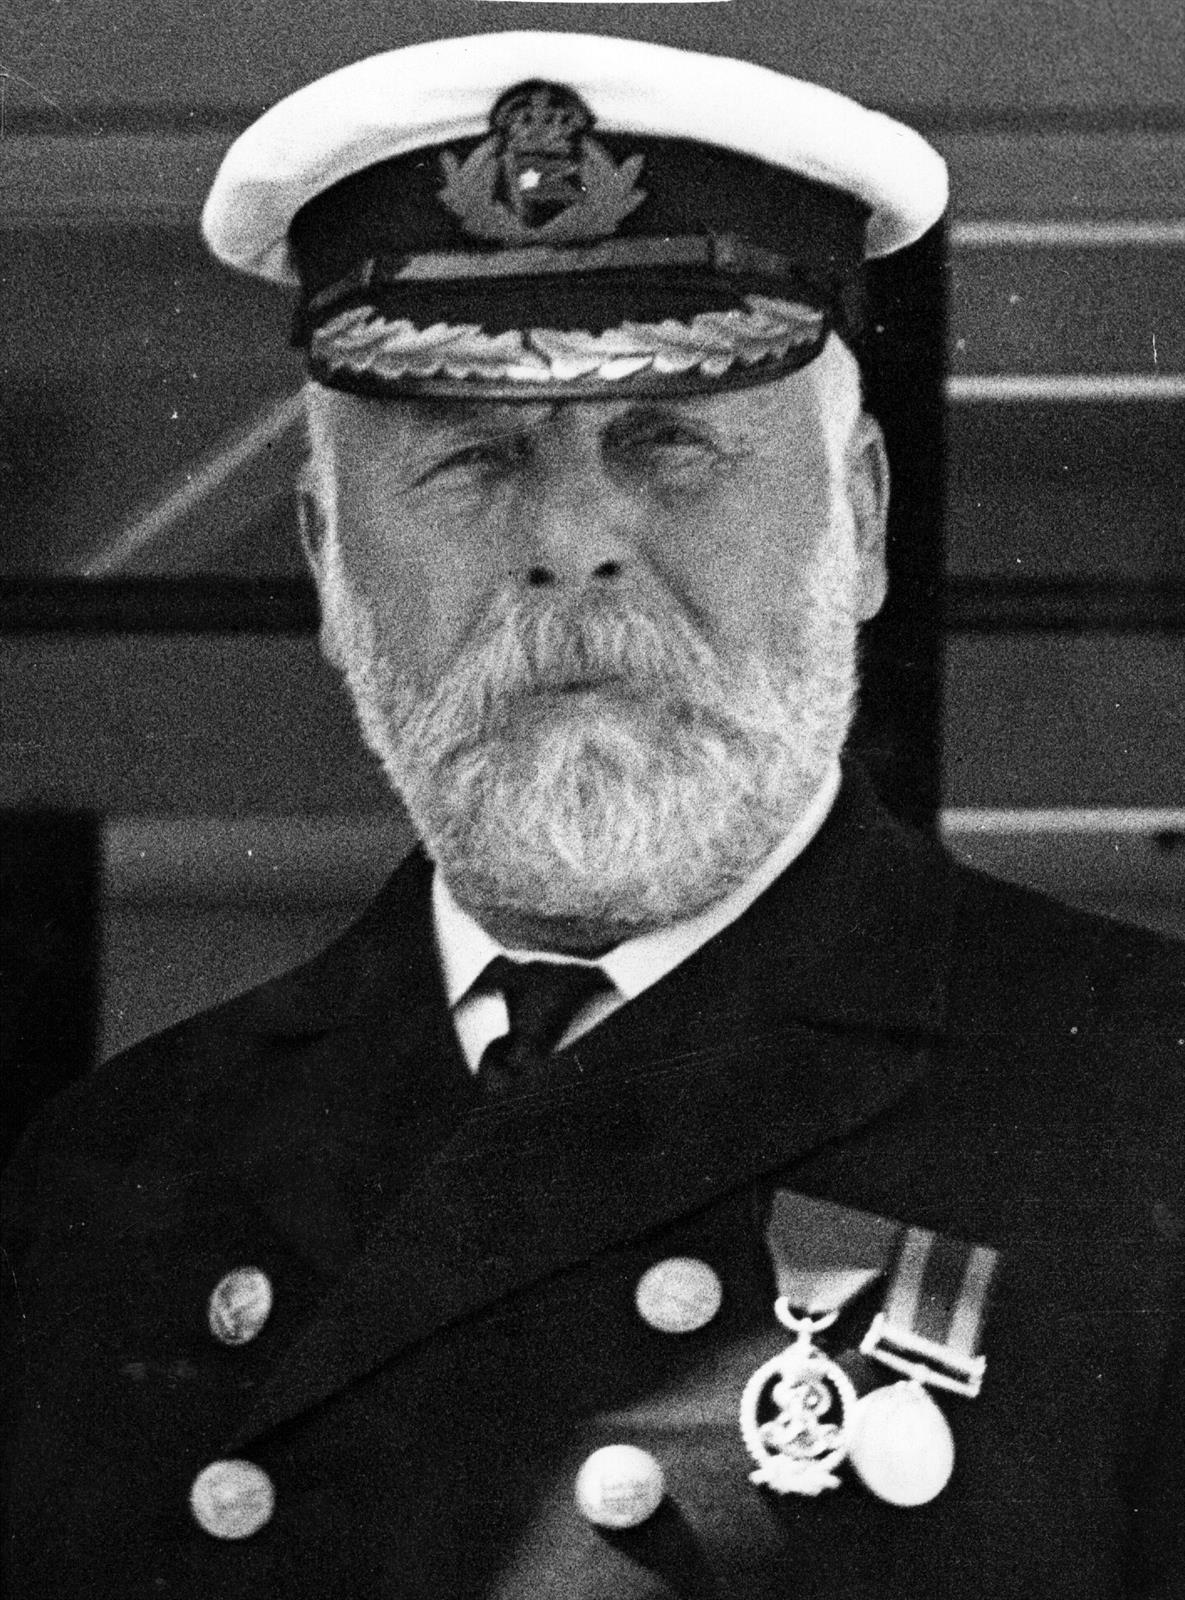  Edward Smith era el capitán del Titanic